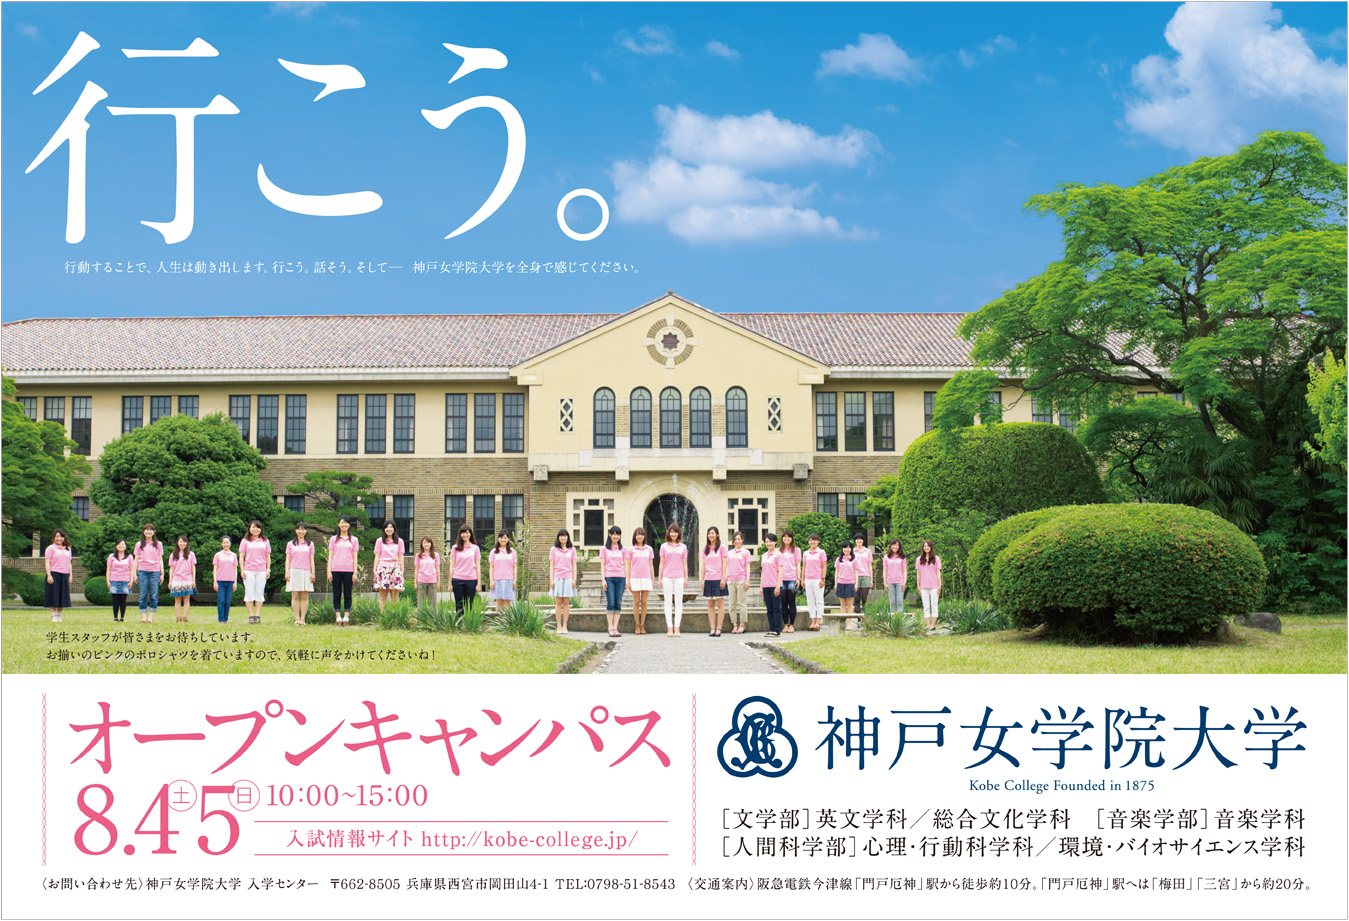 http://kobe-college.jp/kobe-college_poster_%20July.jpg